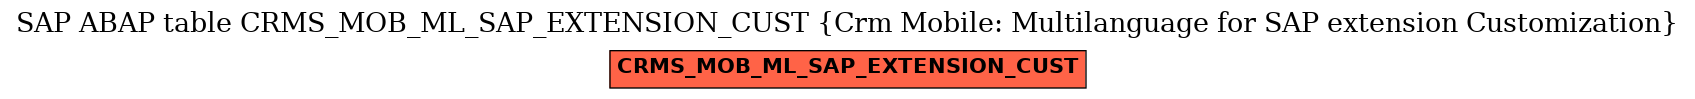 E-R Diagram for table CRMS_MOB_ML_SAP_EXTENSION_CUST (Crm Mobile: Multilanguage for SAP extension Customization)